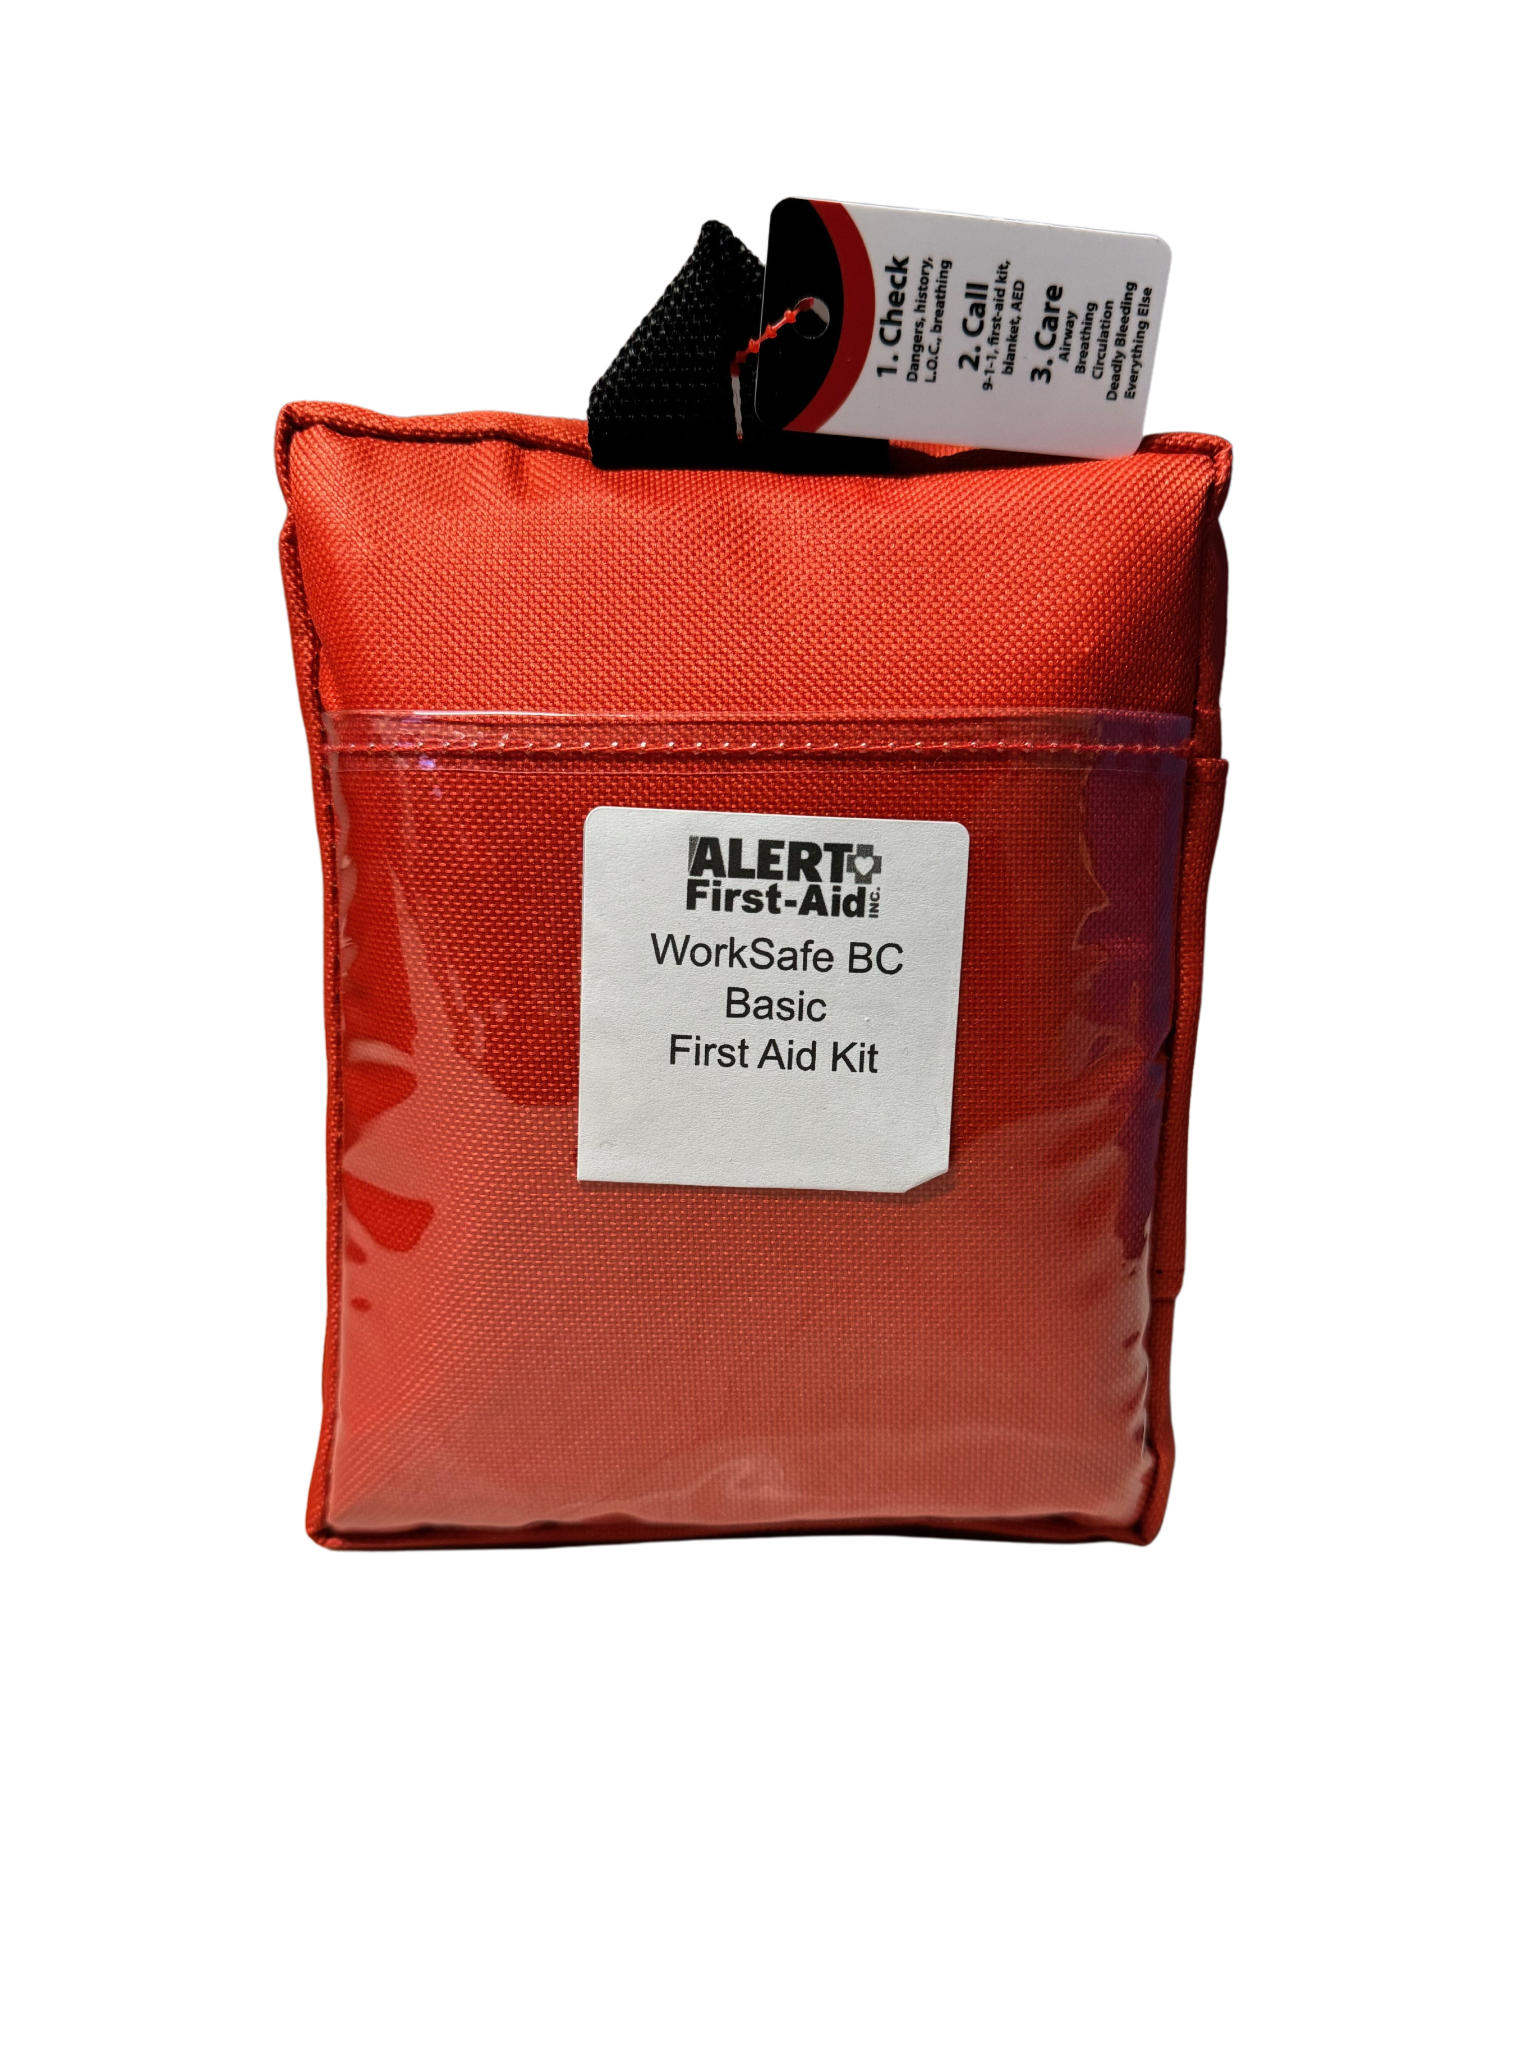 WorkSafeBC Basic First Aid Kit (2020)